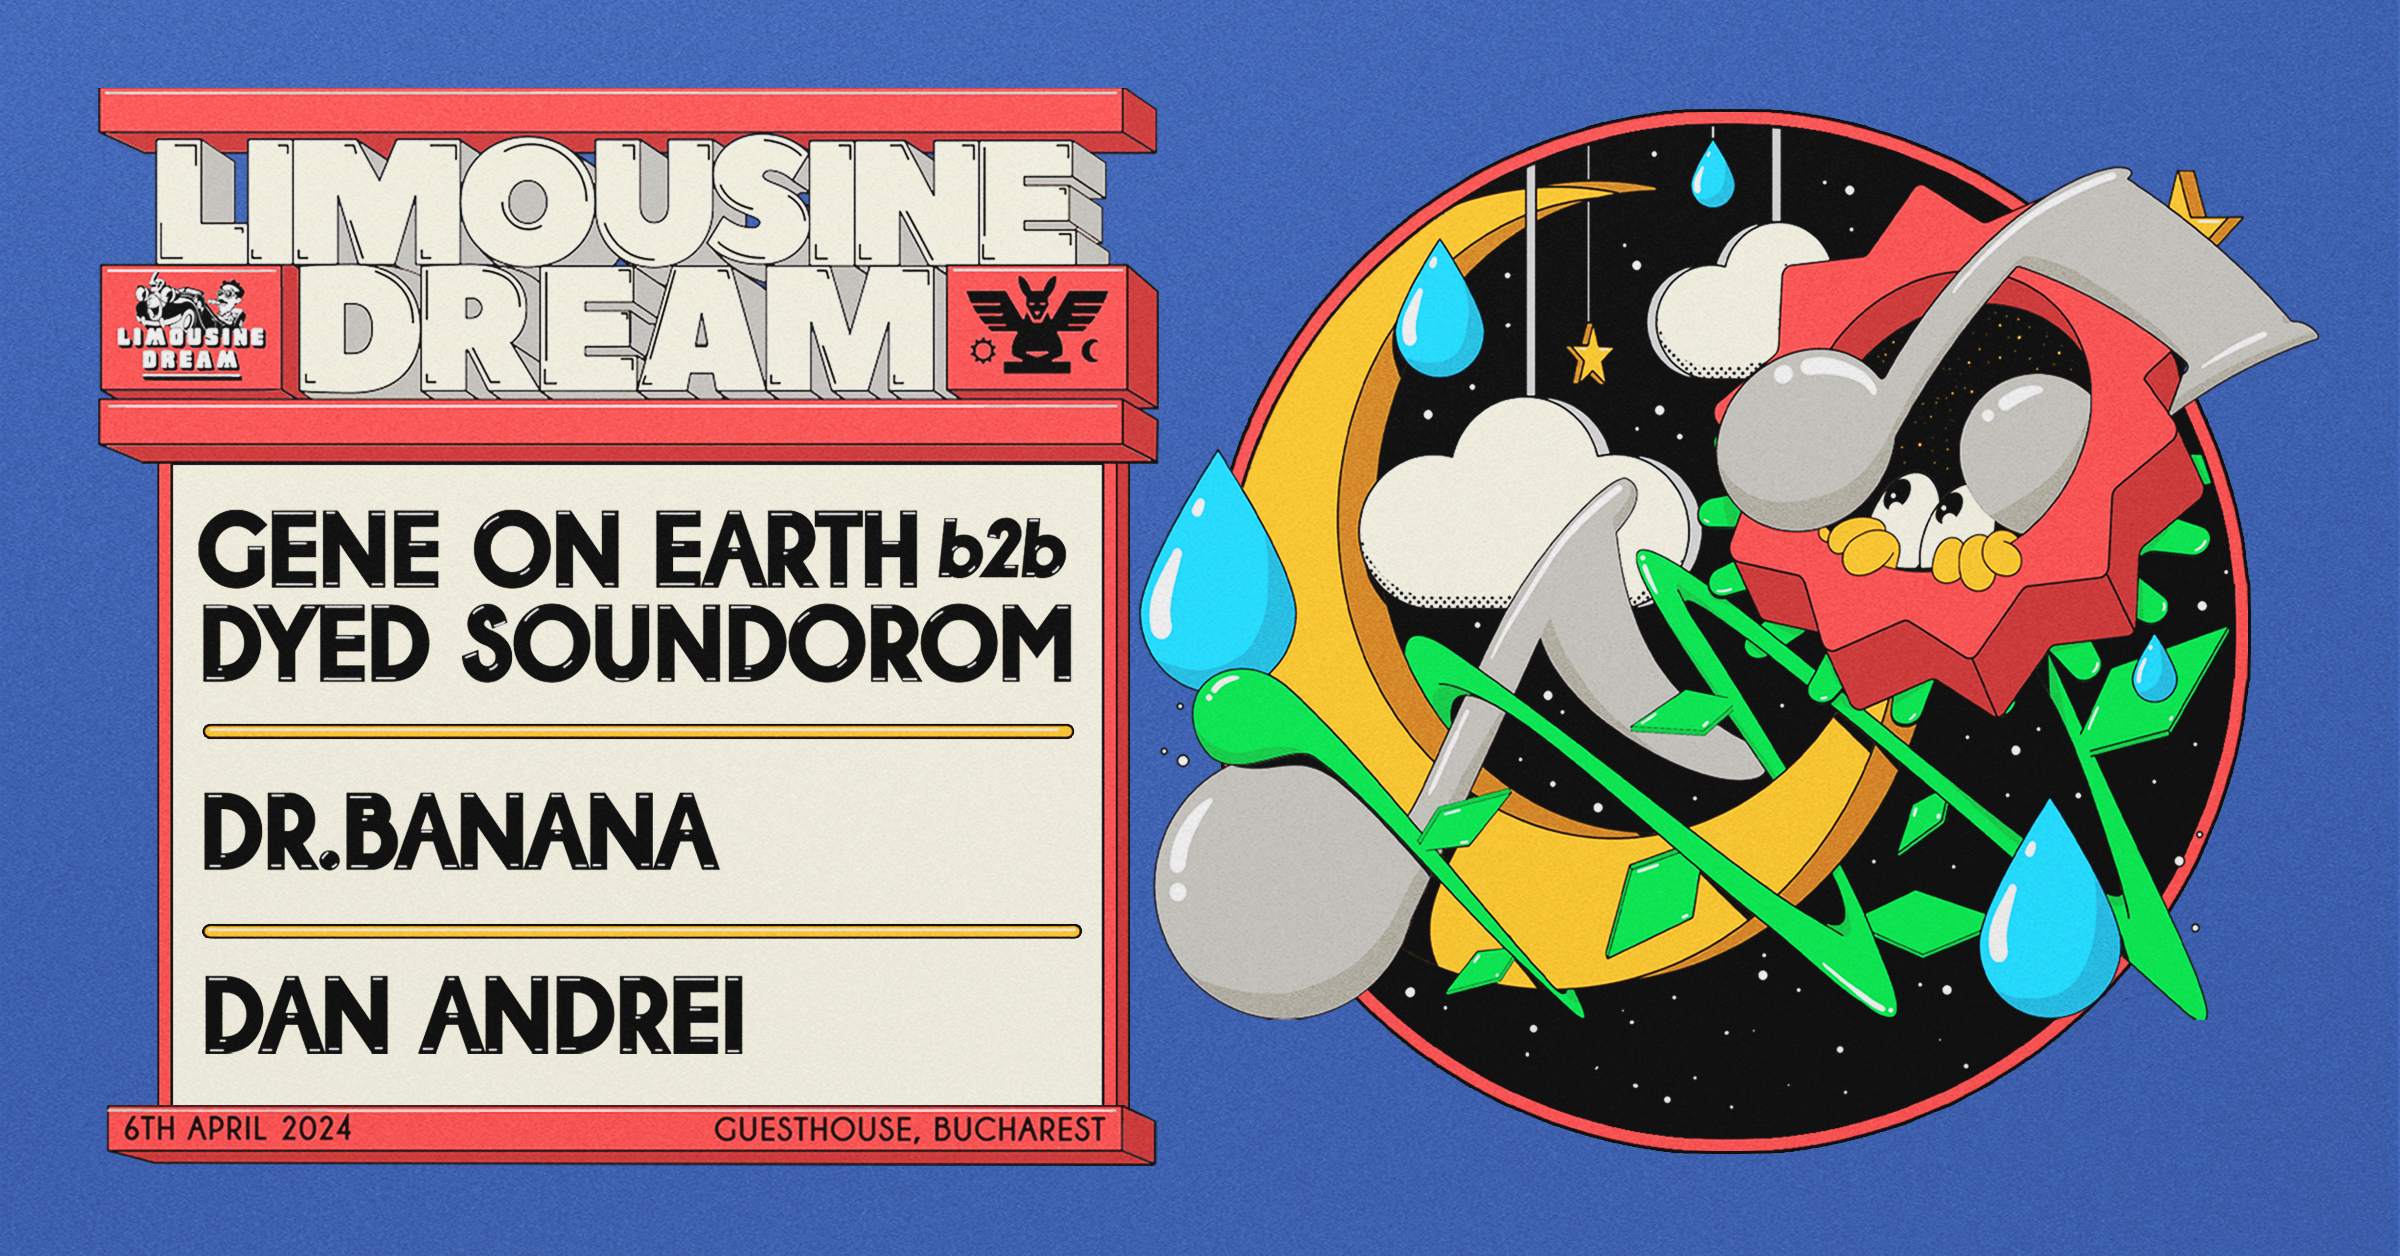 GH - Limousine Dream with Gene On Earth b2b Dyed Soundorom, Dr. Banana, Dan Andrei - フライヤー表